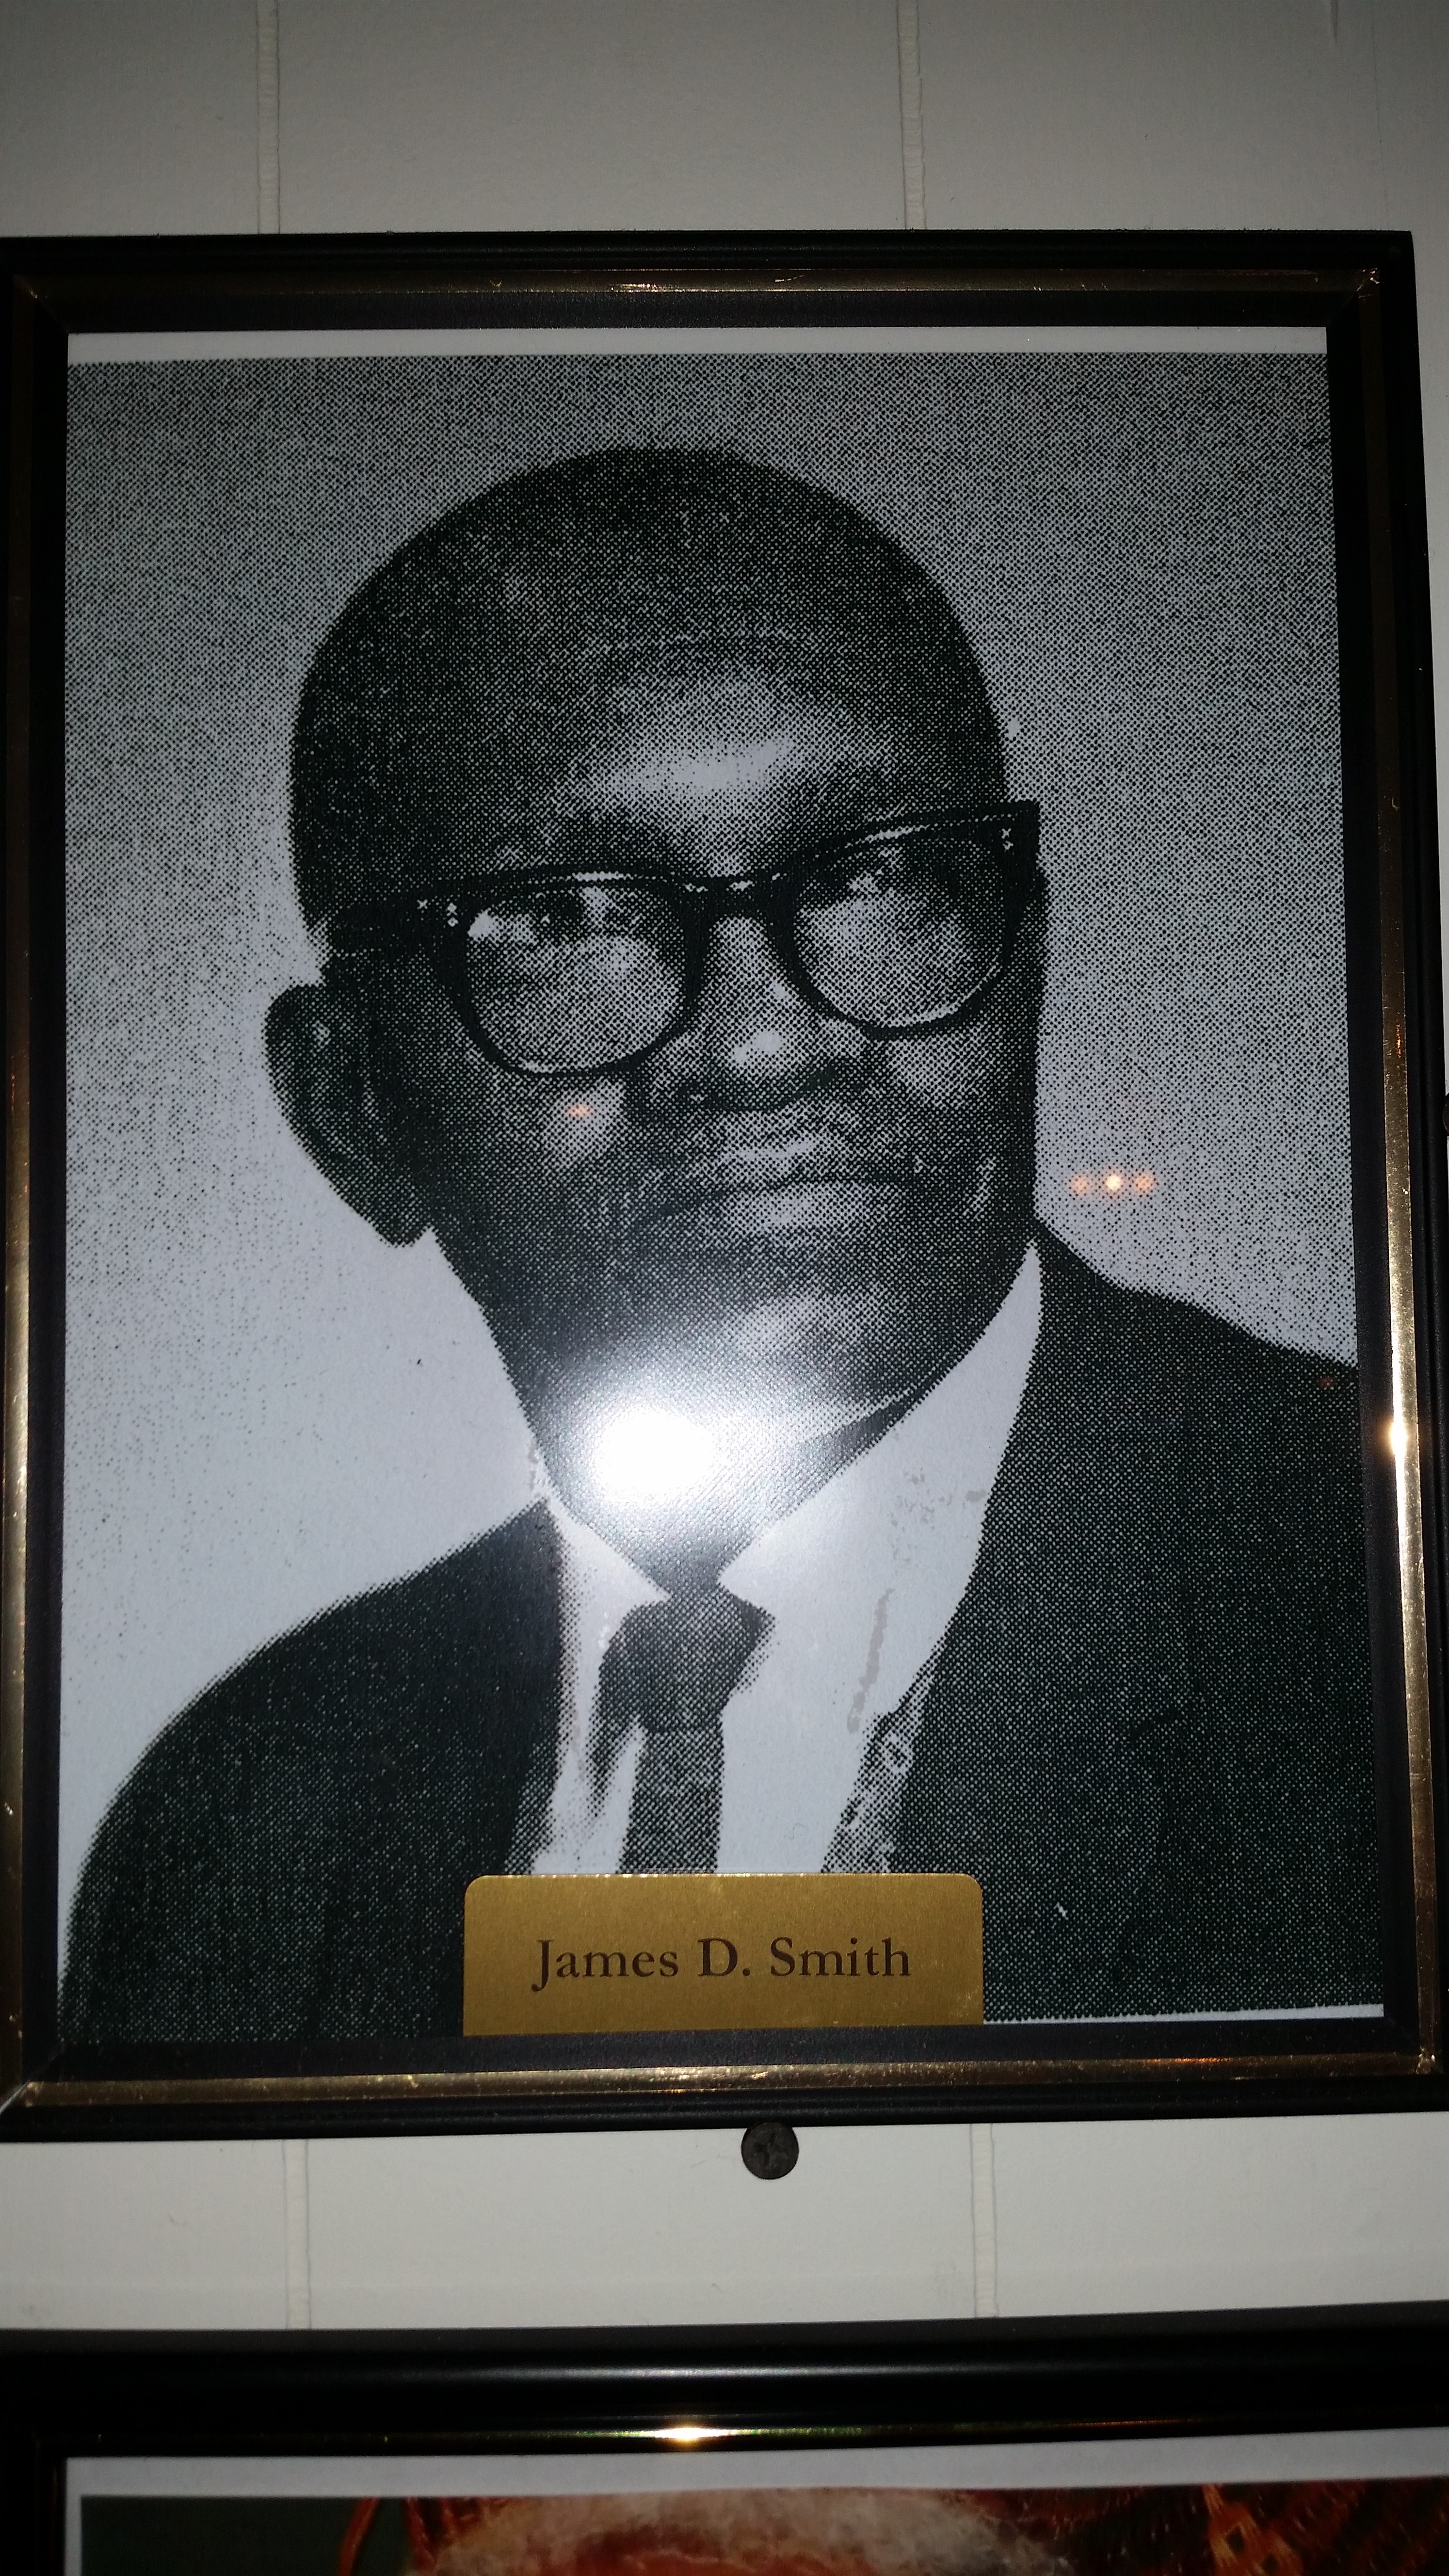 Mr. James D. Smith